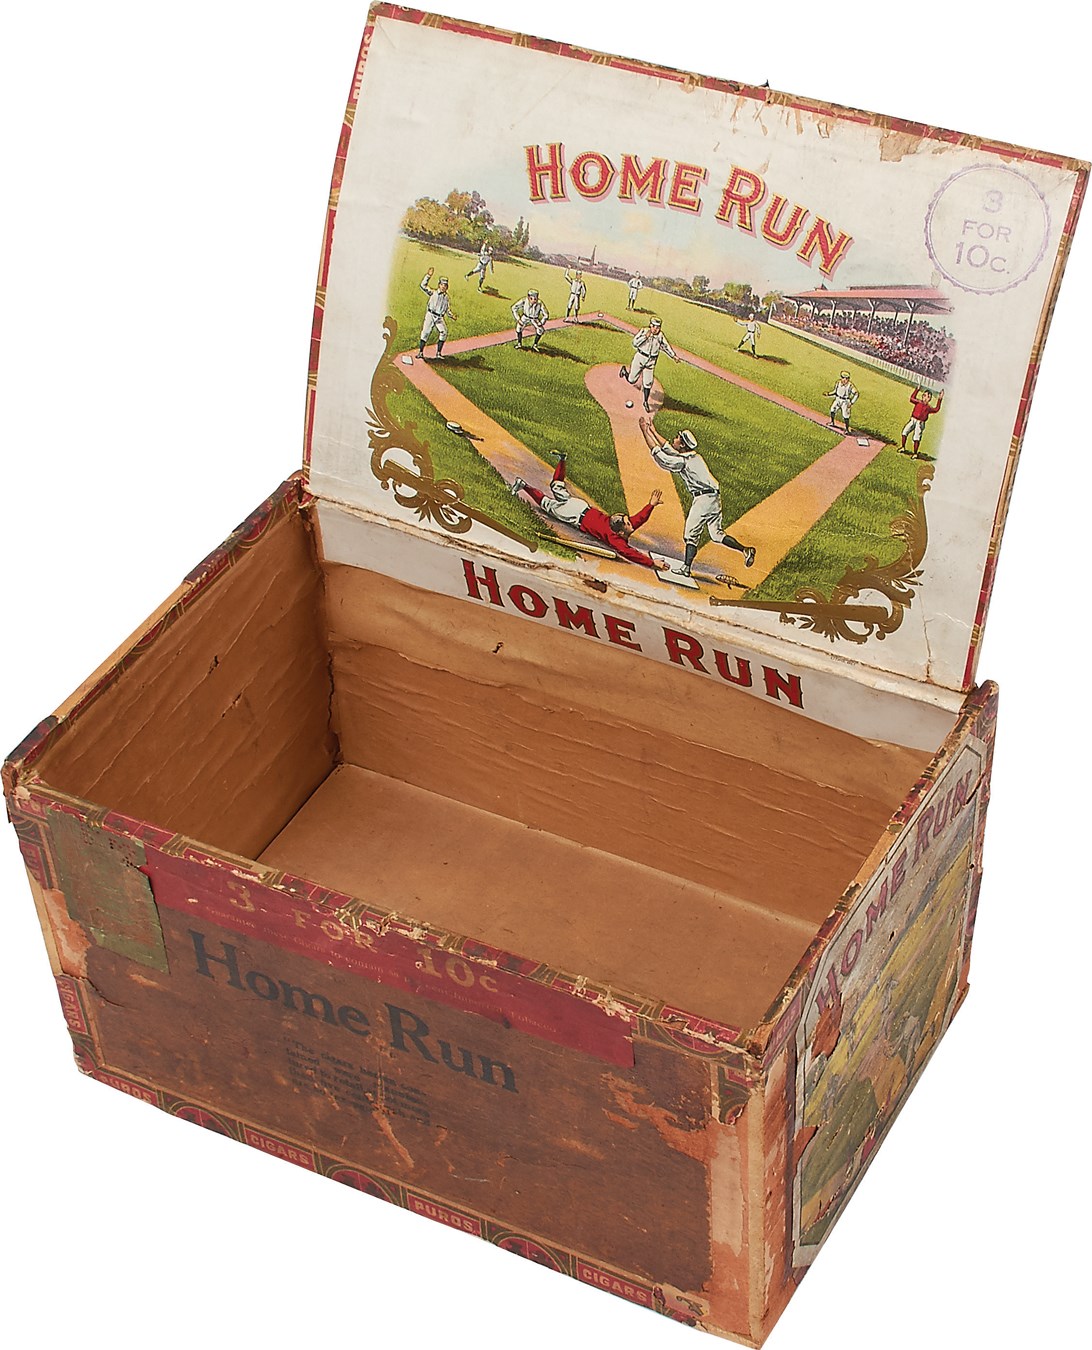 Early Baseball - Classic 1905 "Home Run" Baseball Cigar Box - Only One Known